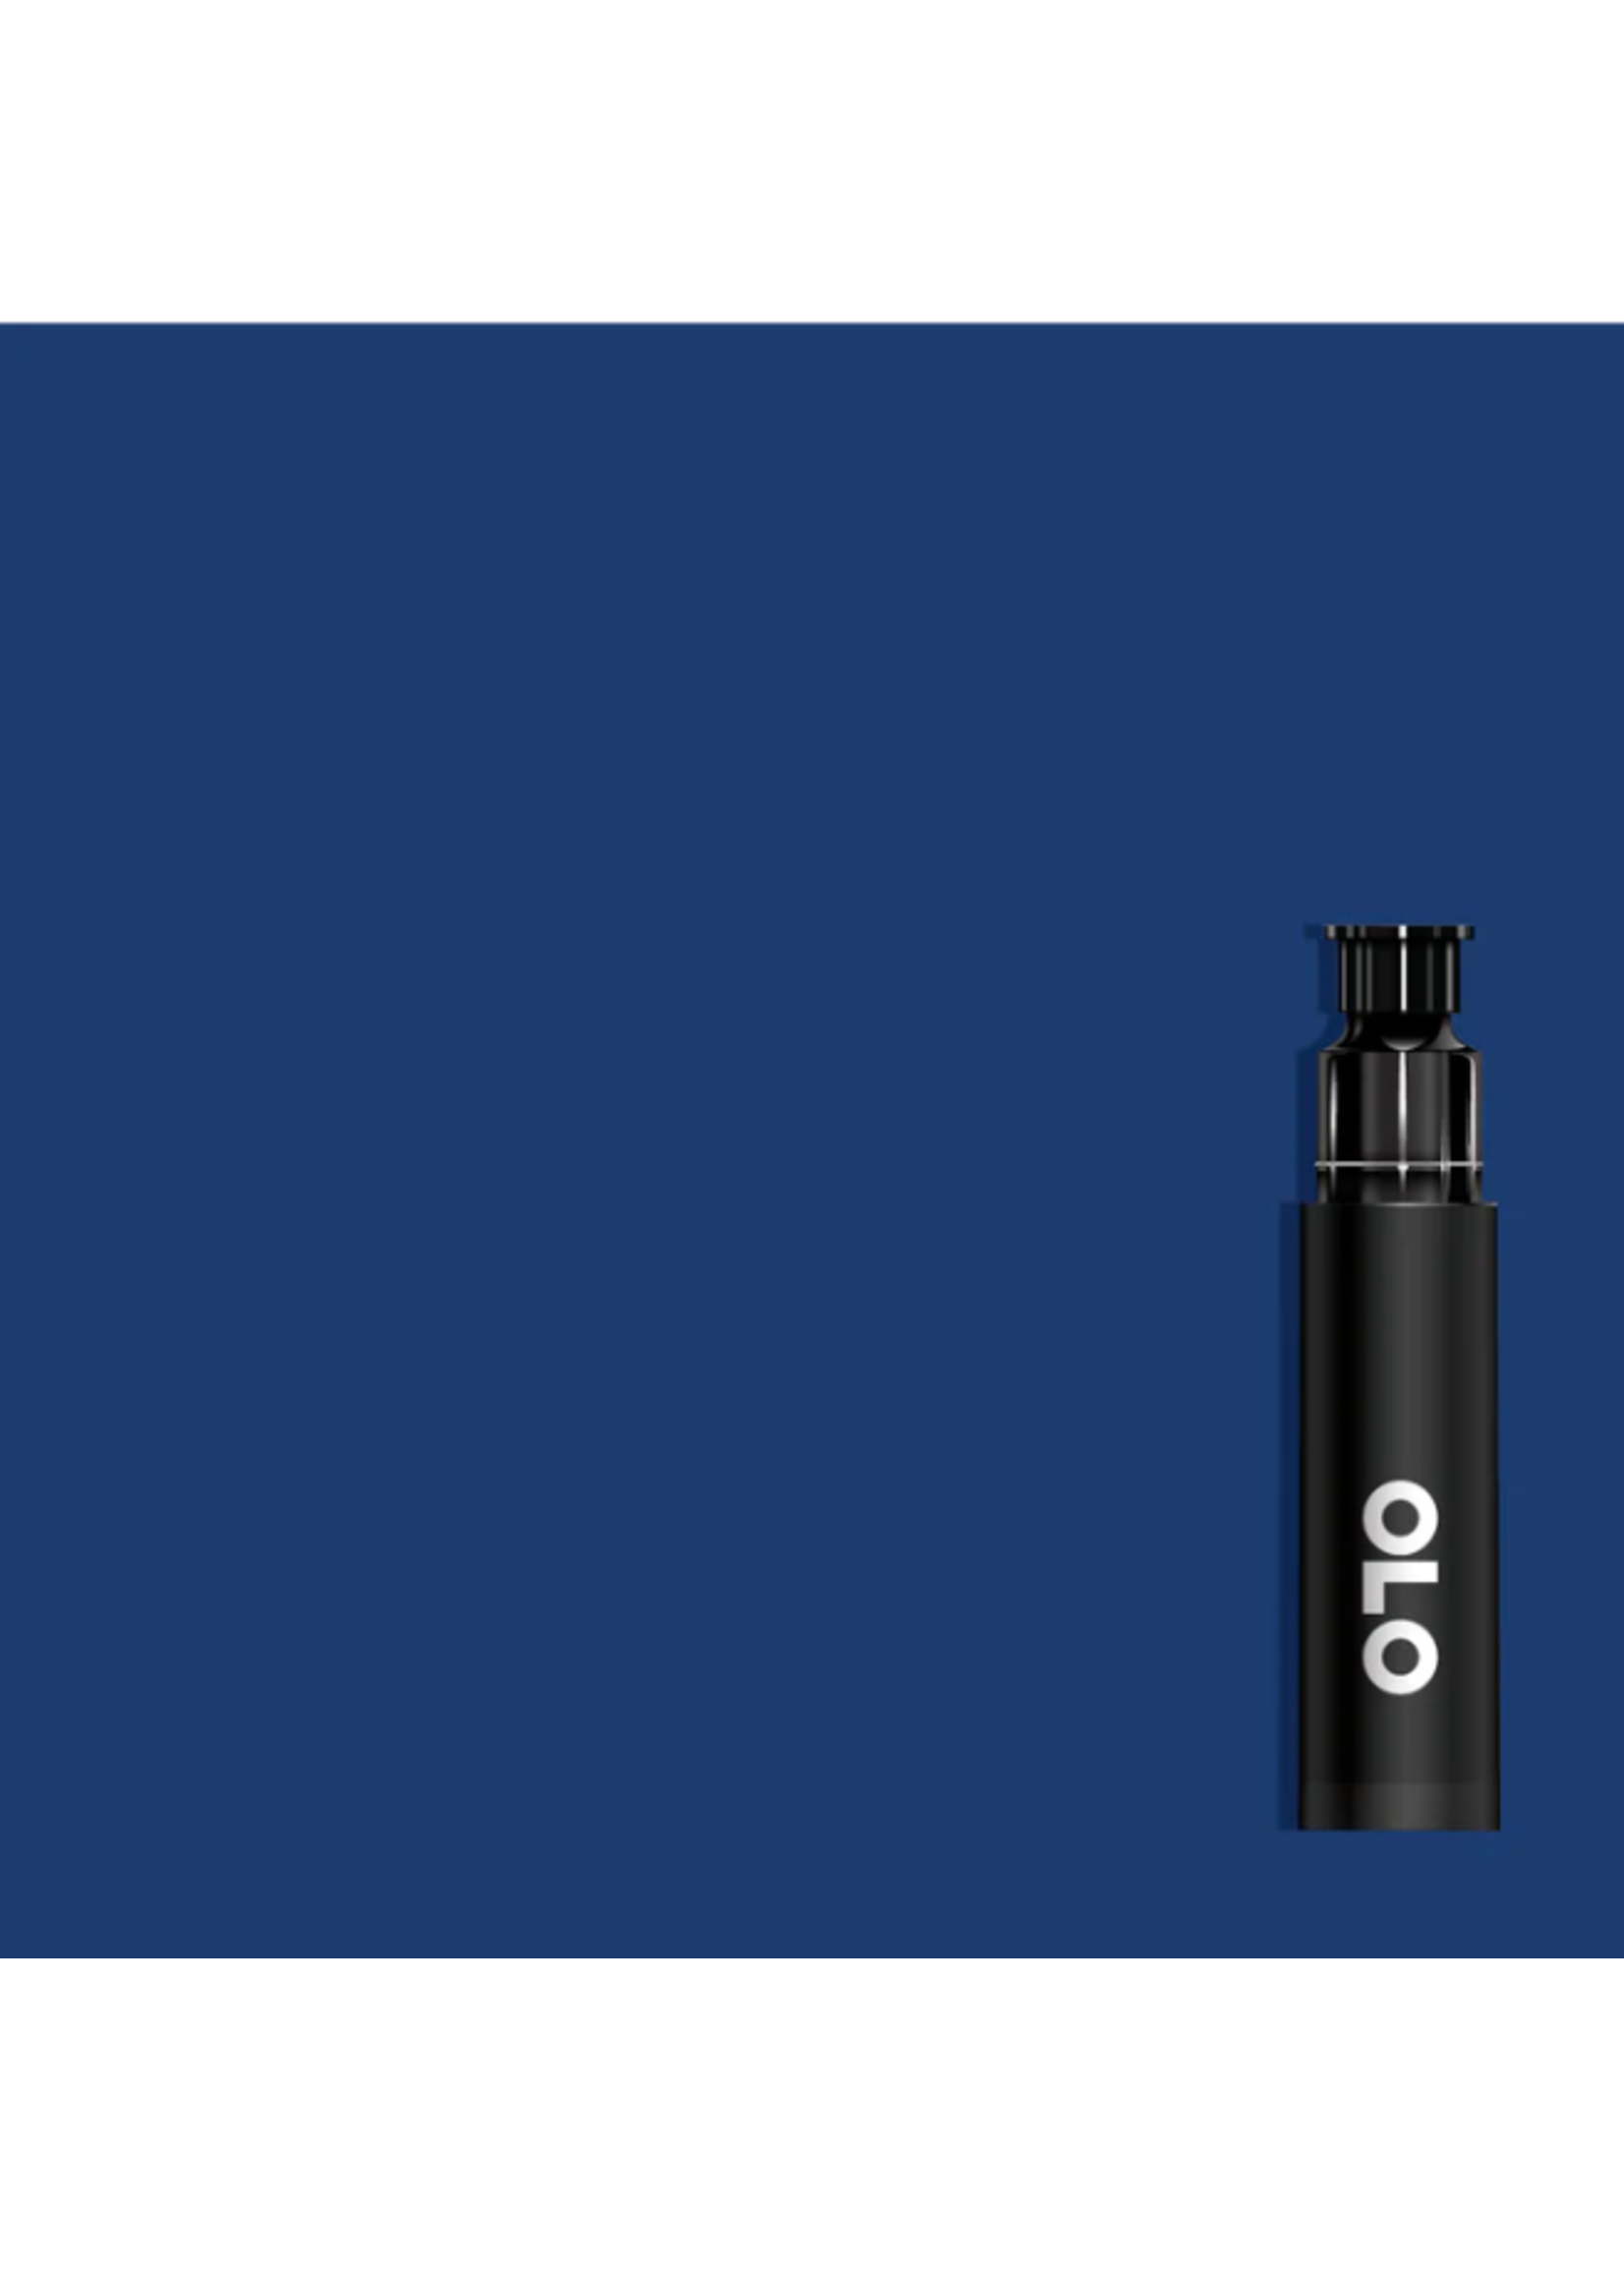 OLO OLO Brush Replacement Cartridge: Lapis Lazuli